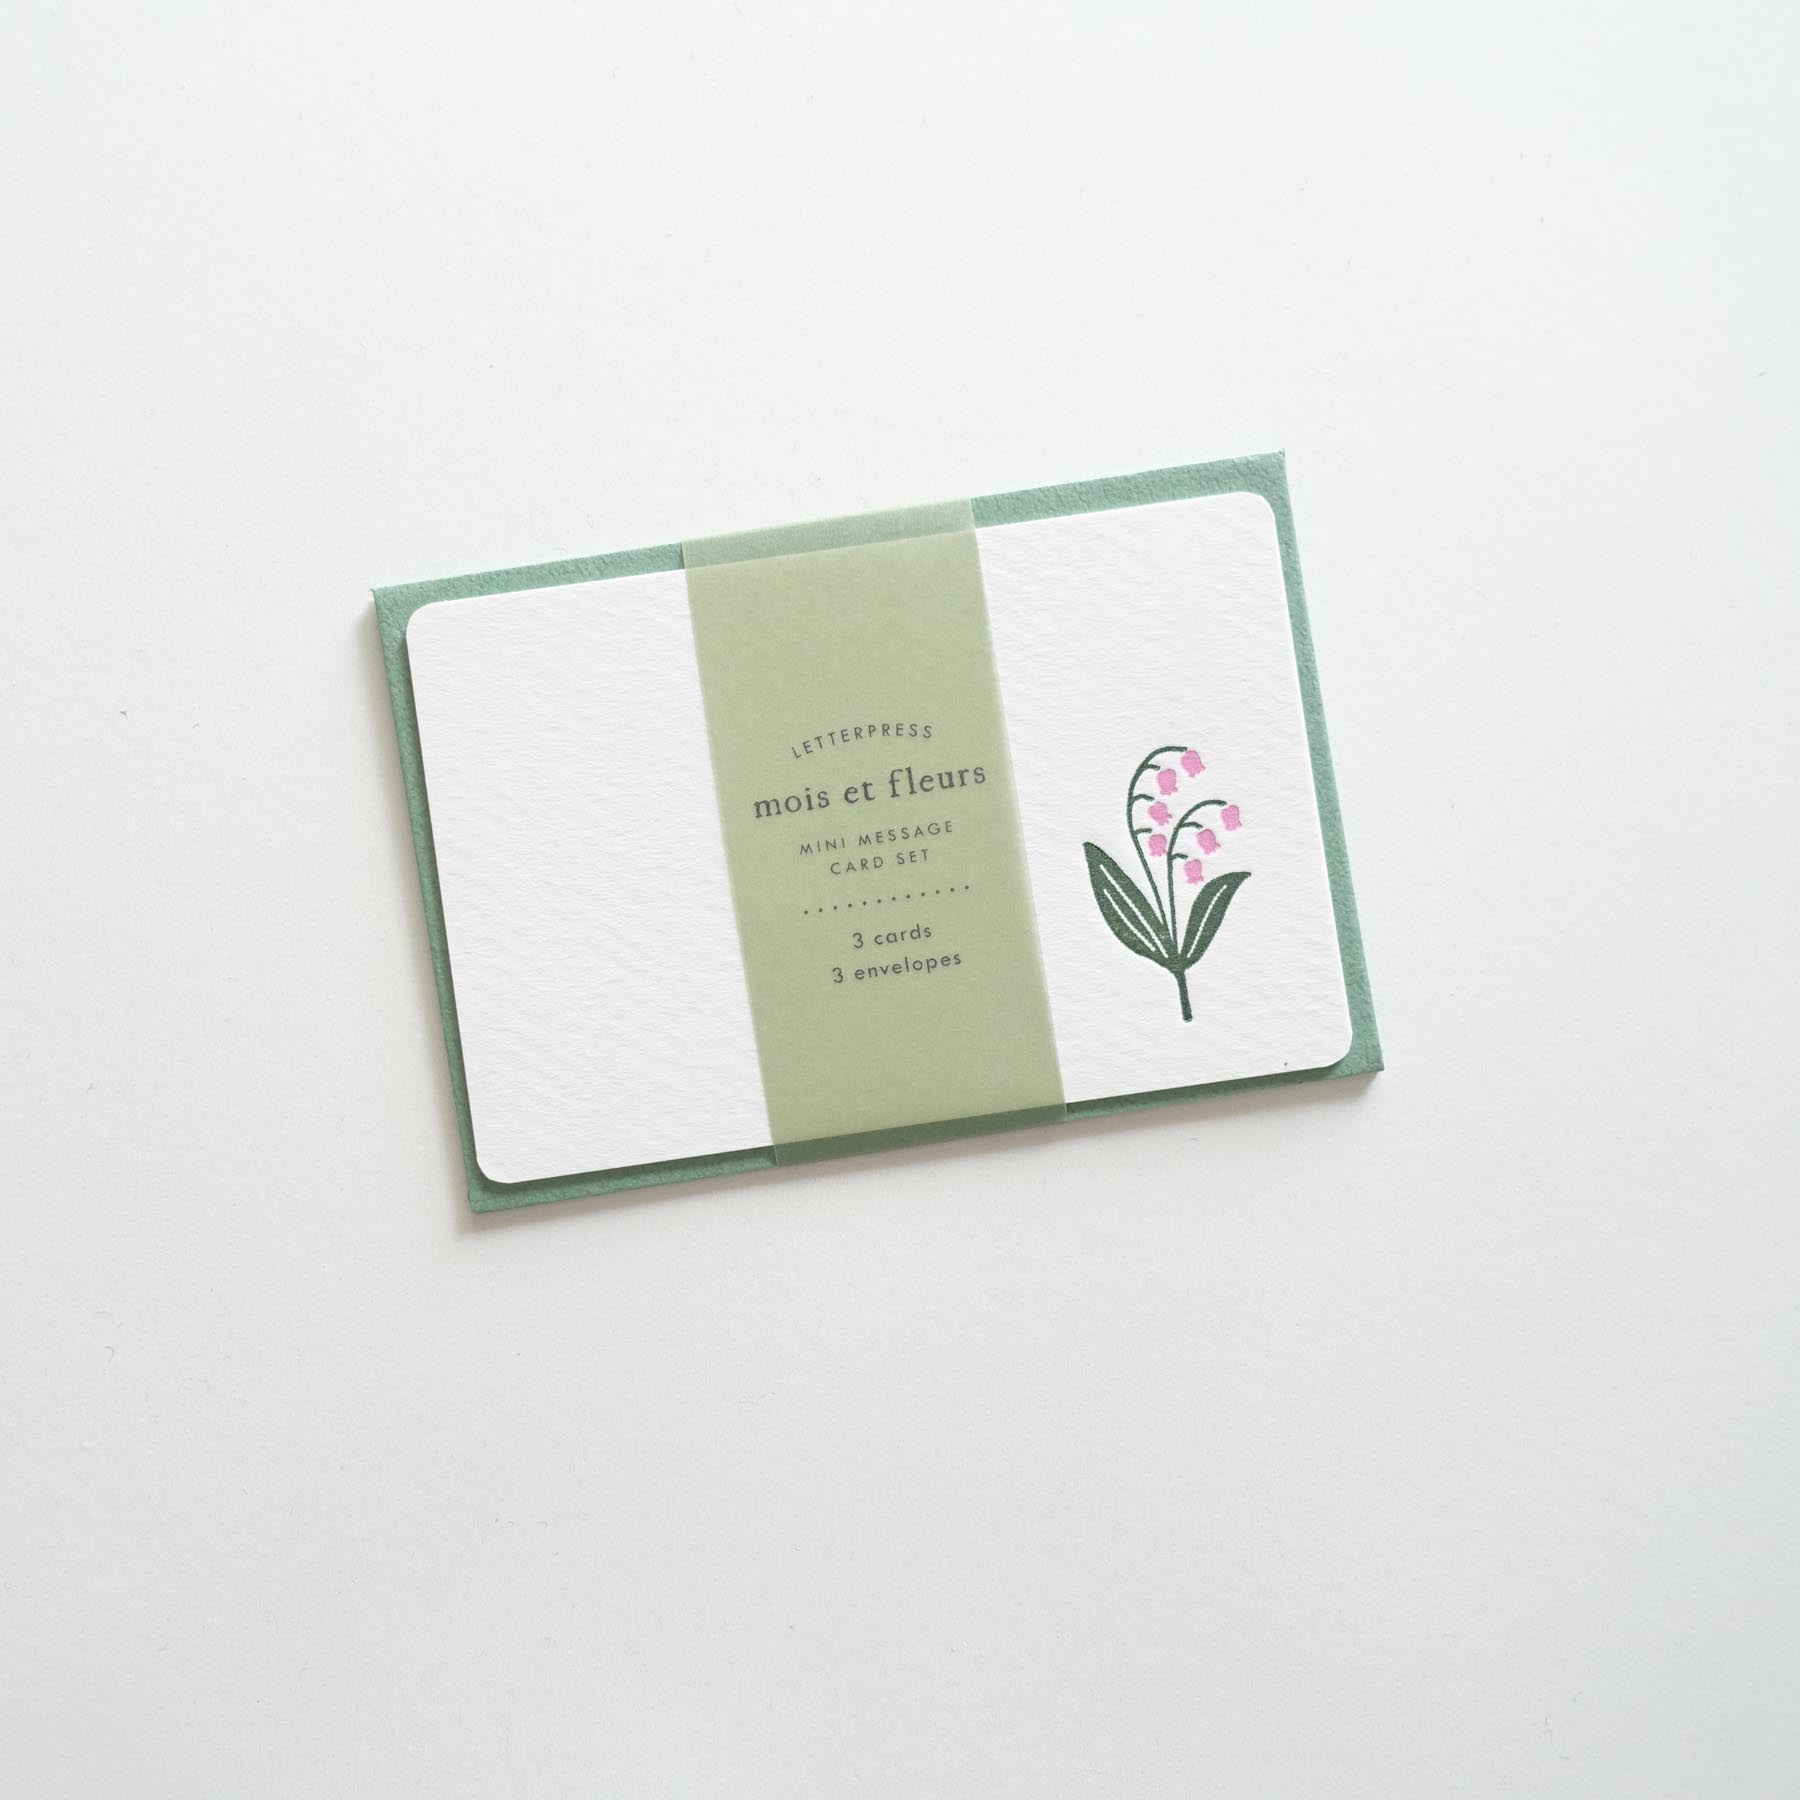 lily of the valley suzuran flower mini card envelope set letterpress australia mois et fleurs